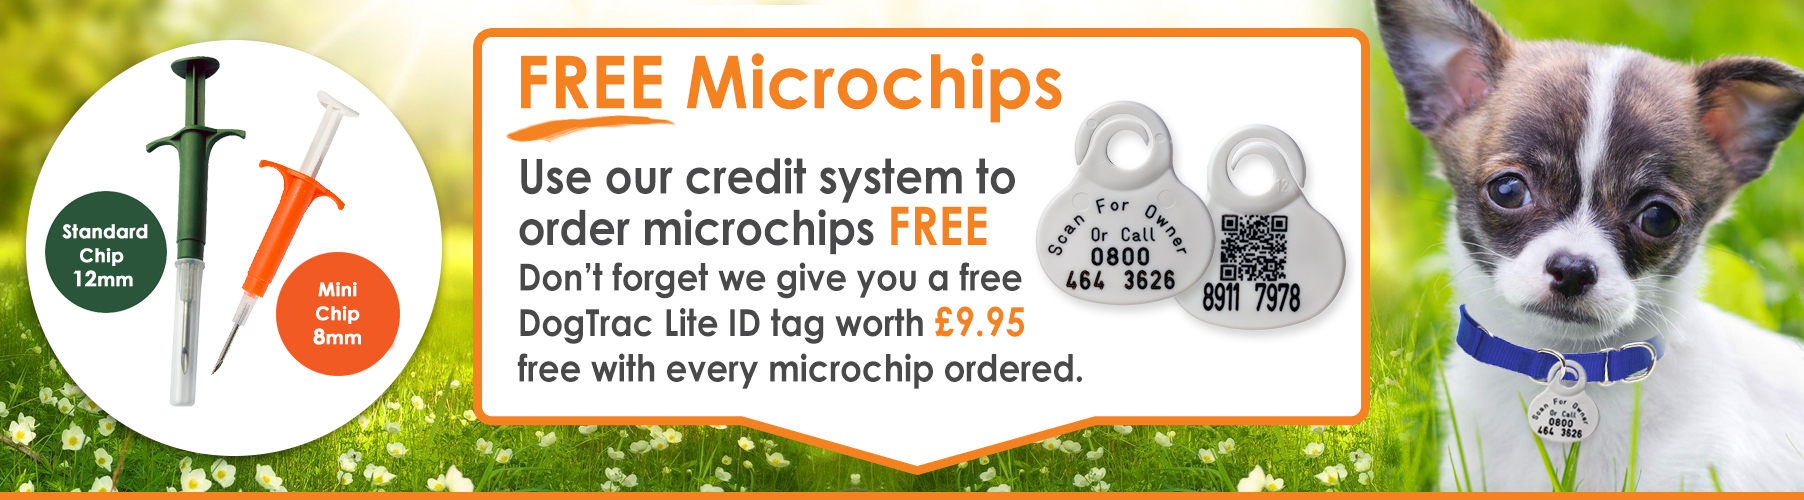 Get FREE Microchips